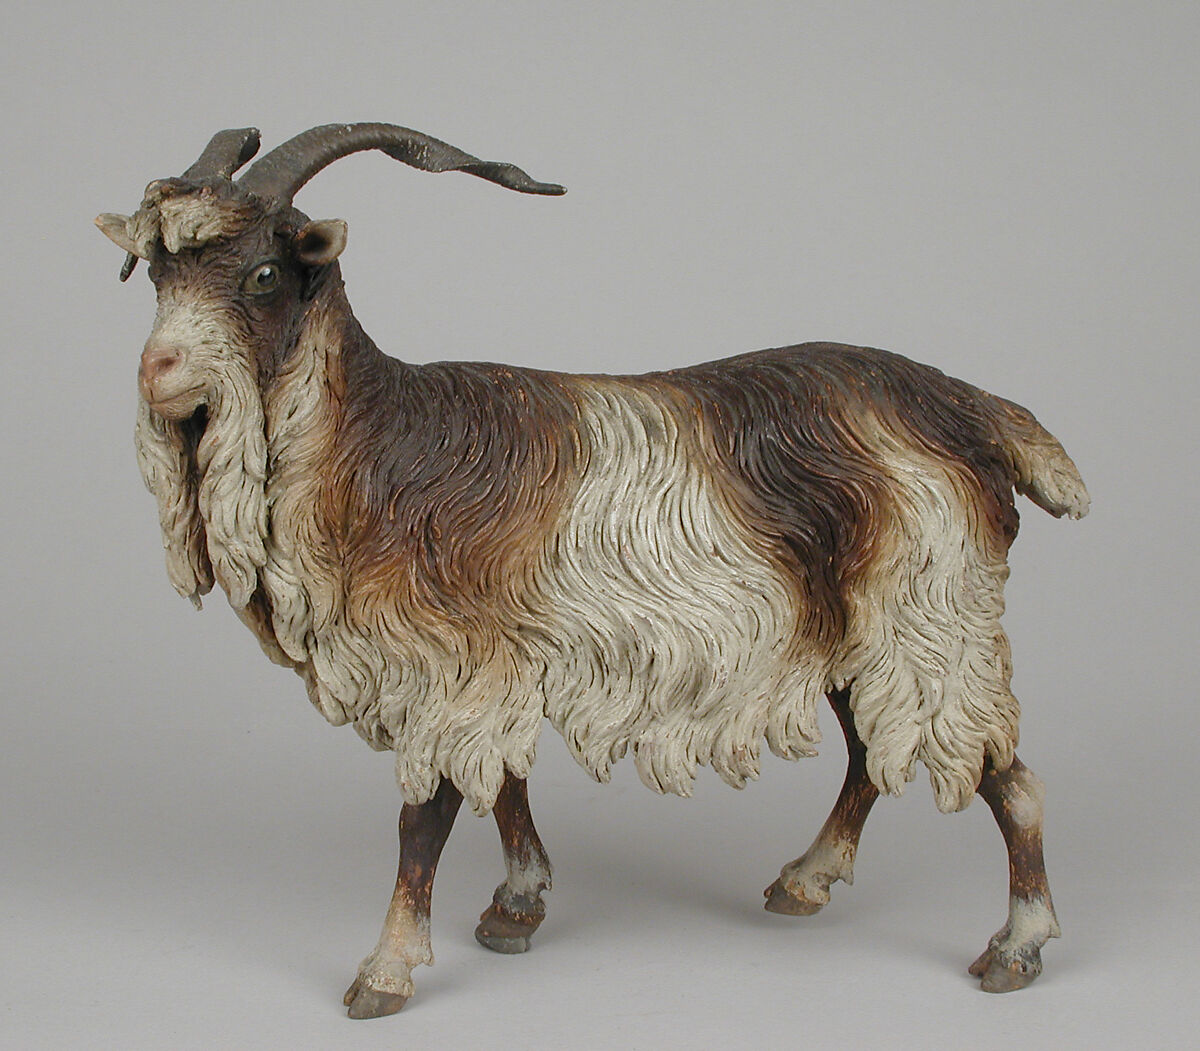 Male adult goat, Polychromed terracotta body, wooden legs, metal horns